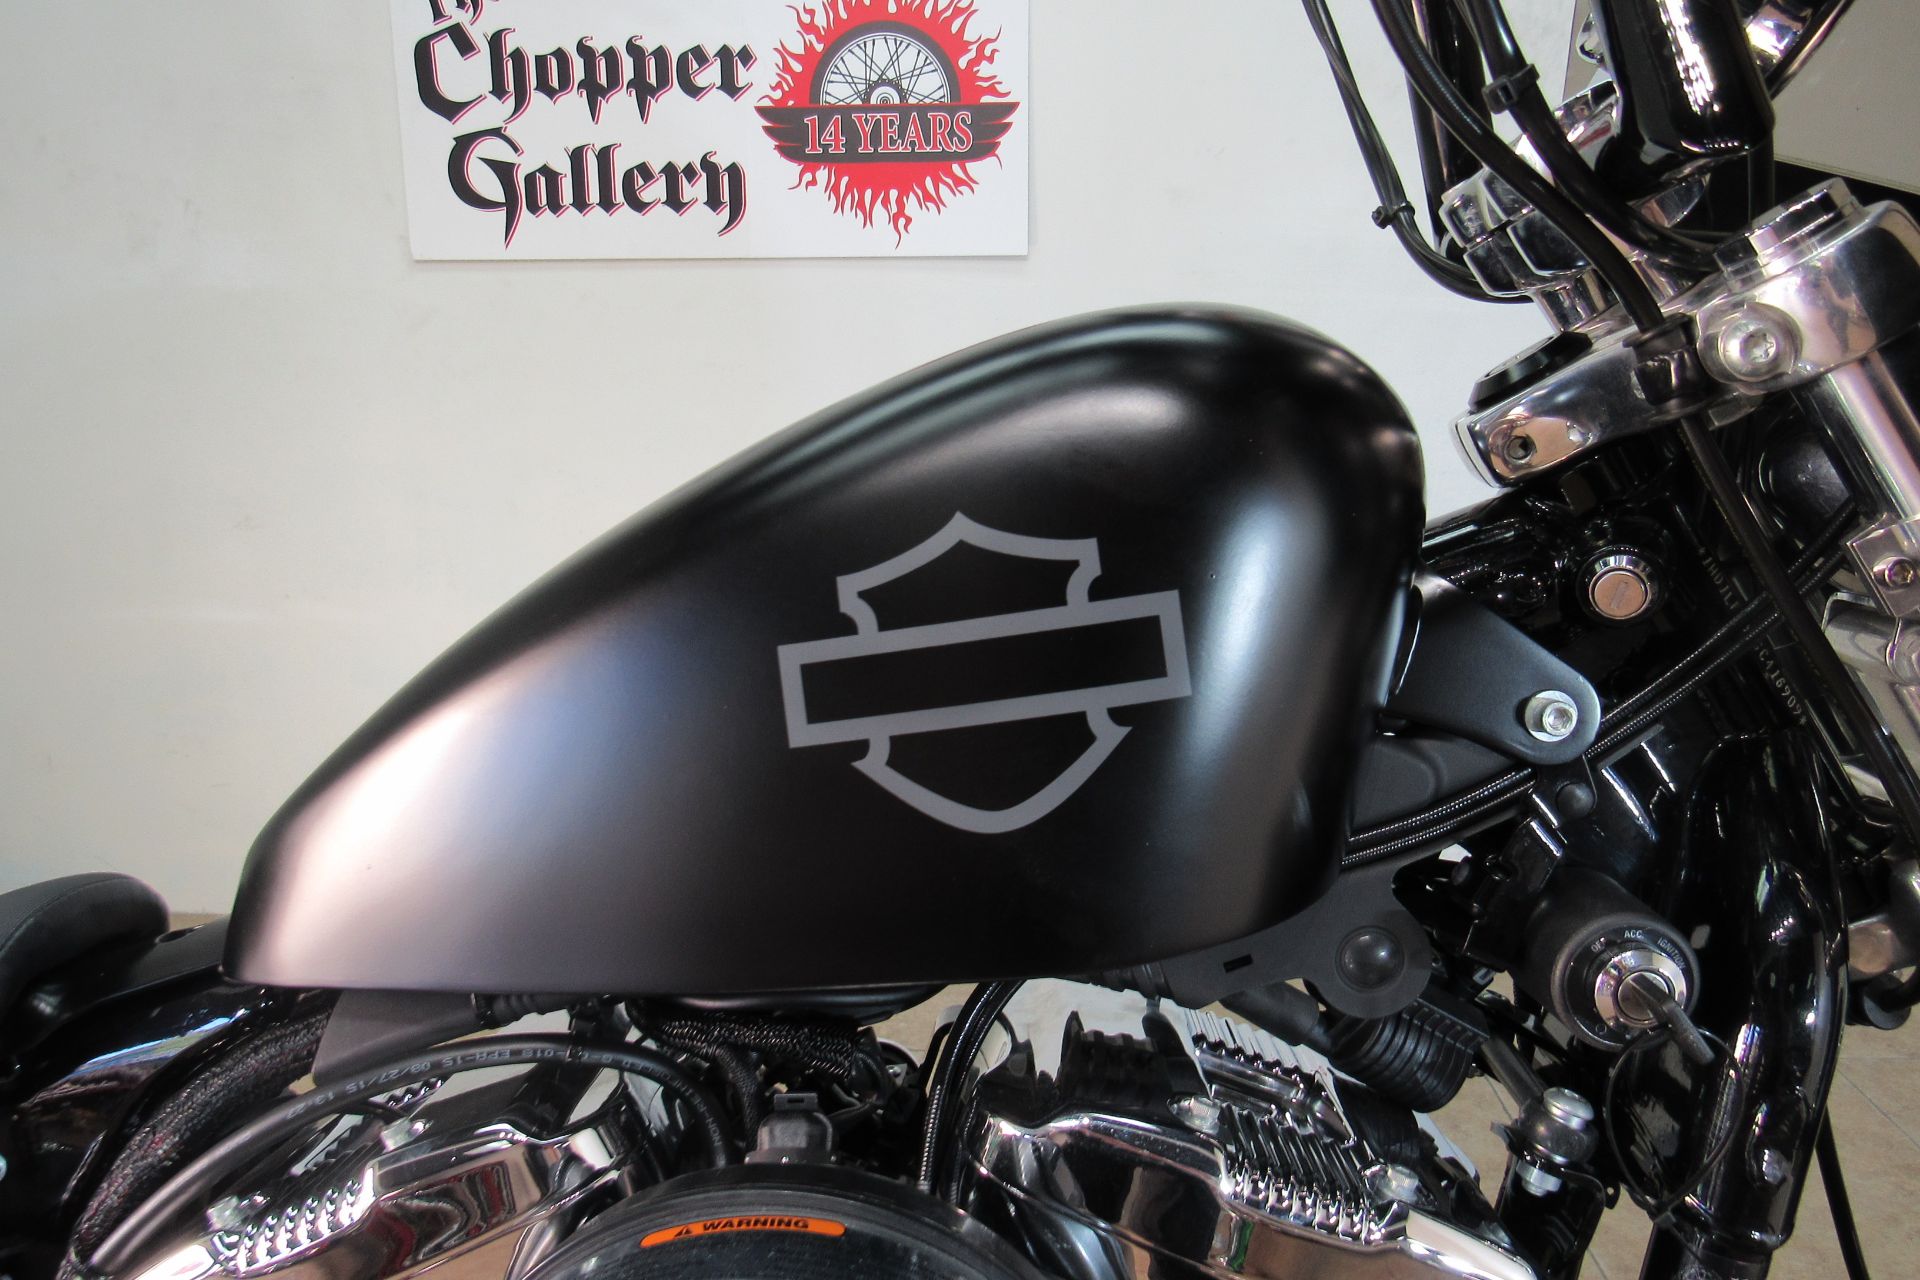 2016 Harley-Davidson Seventy-Two® in Temecula, California - Photo 7